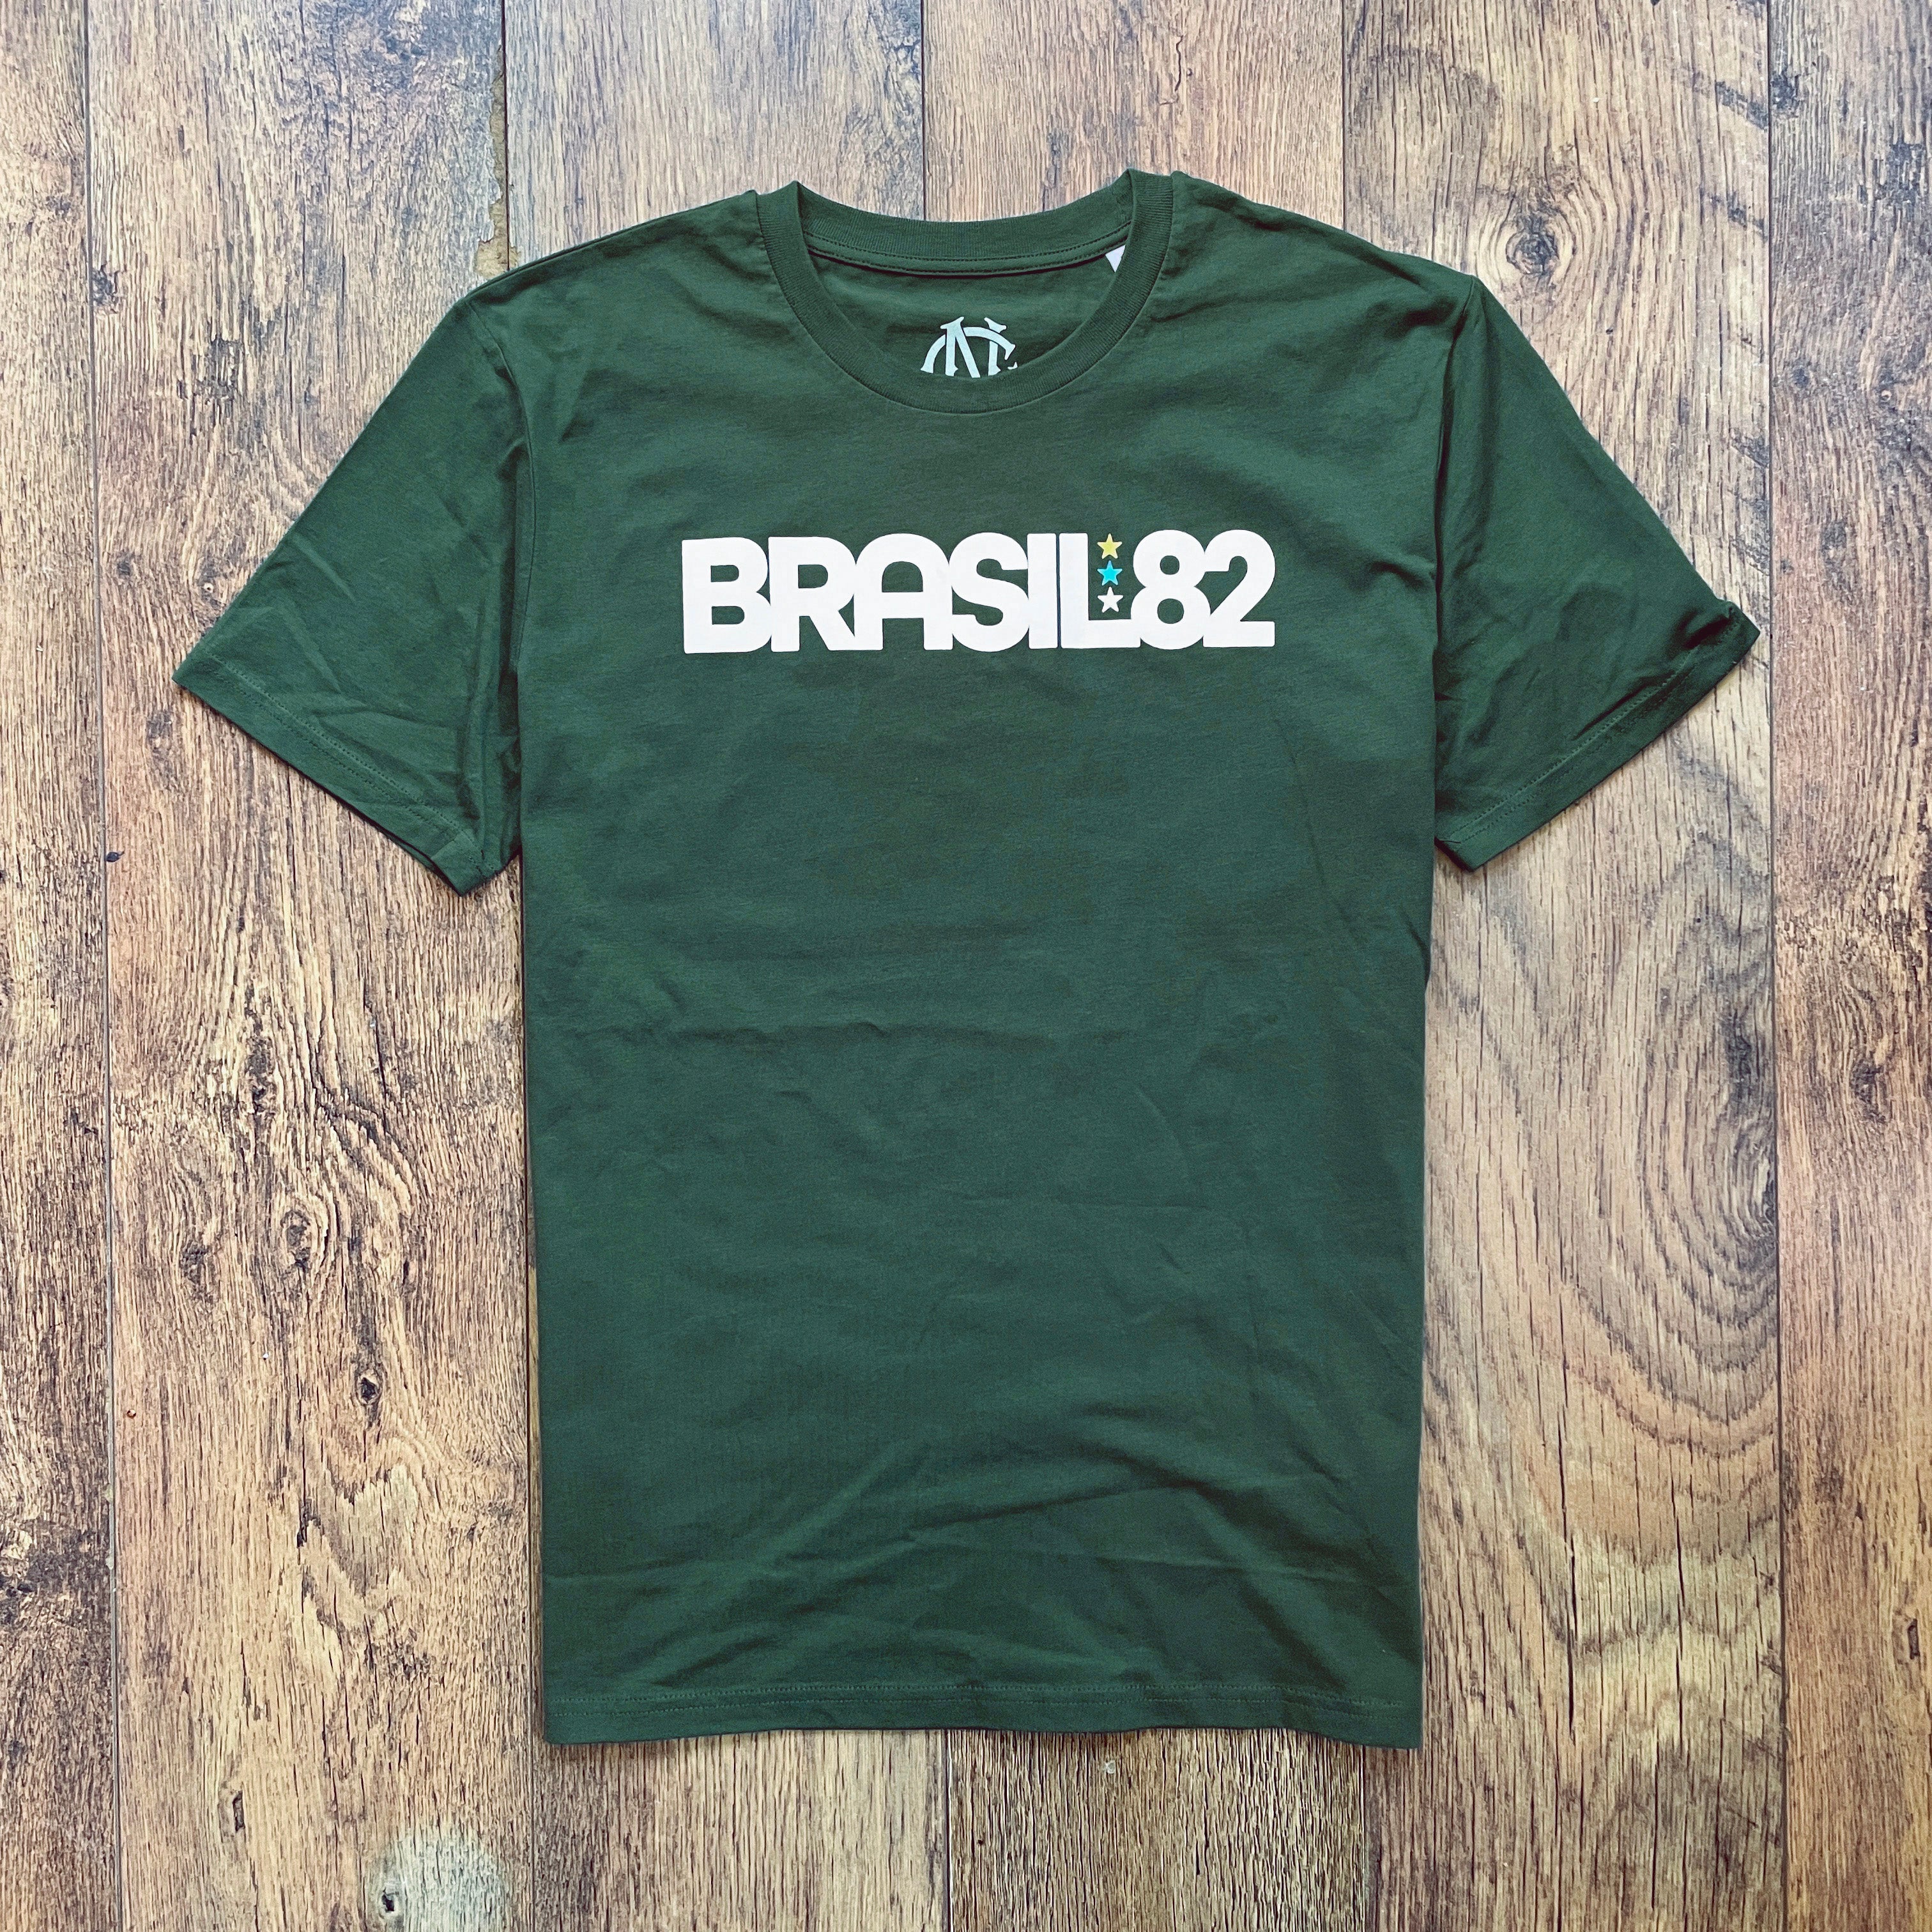 Brasil Brazil 1982 shirt -t-shirt